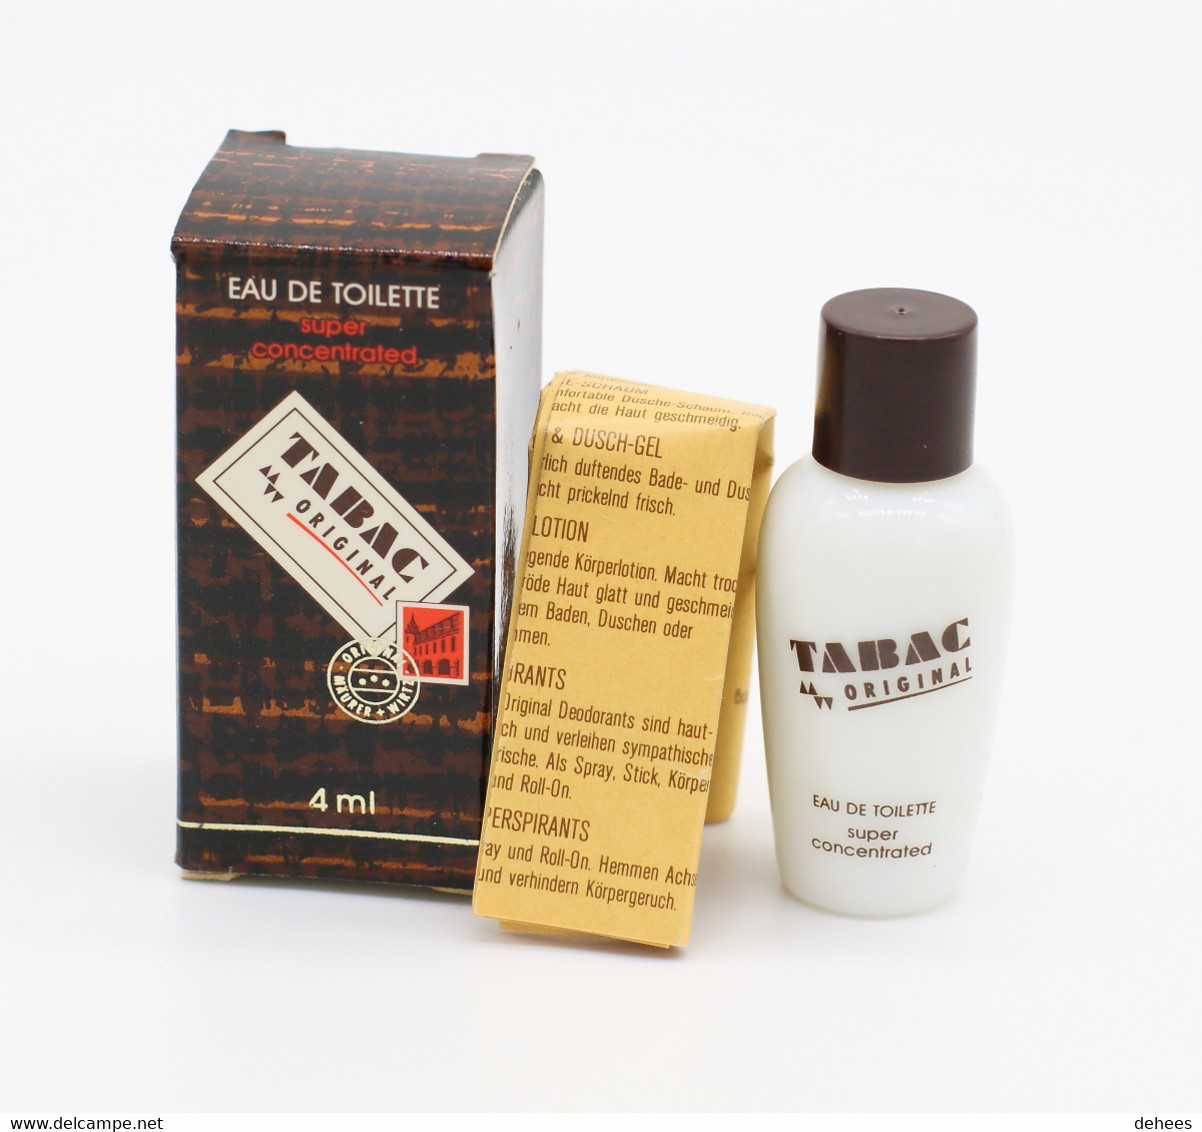 Maurer & Wirtz, Tabac Original - Miniatures Men's Fragrances (in Box)